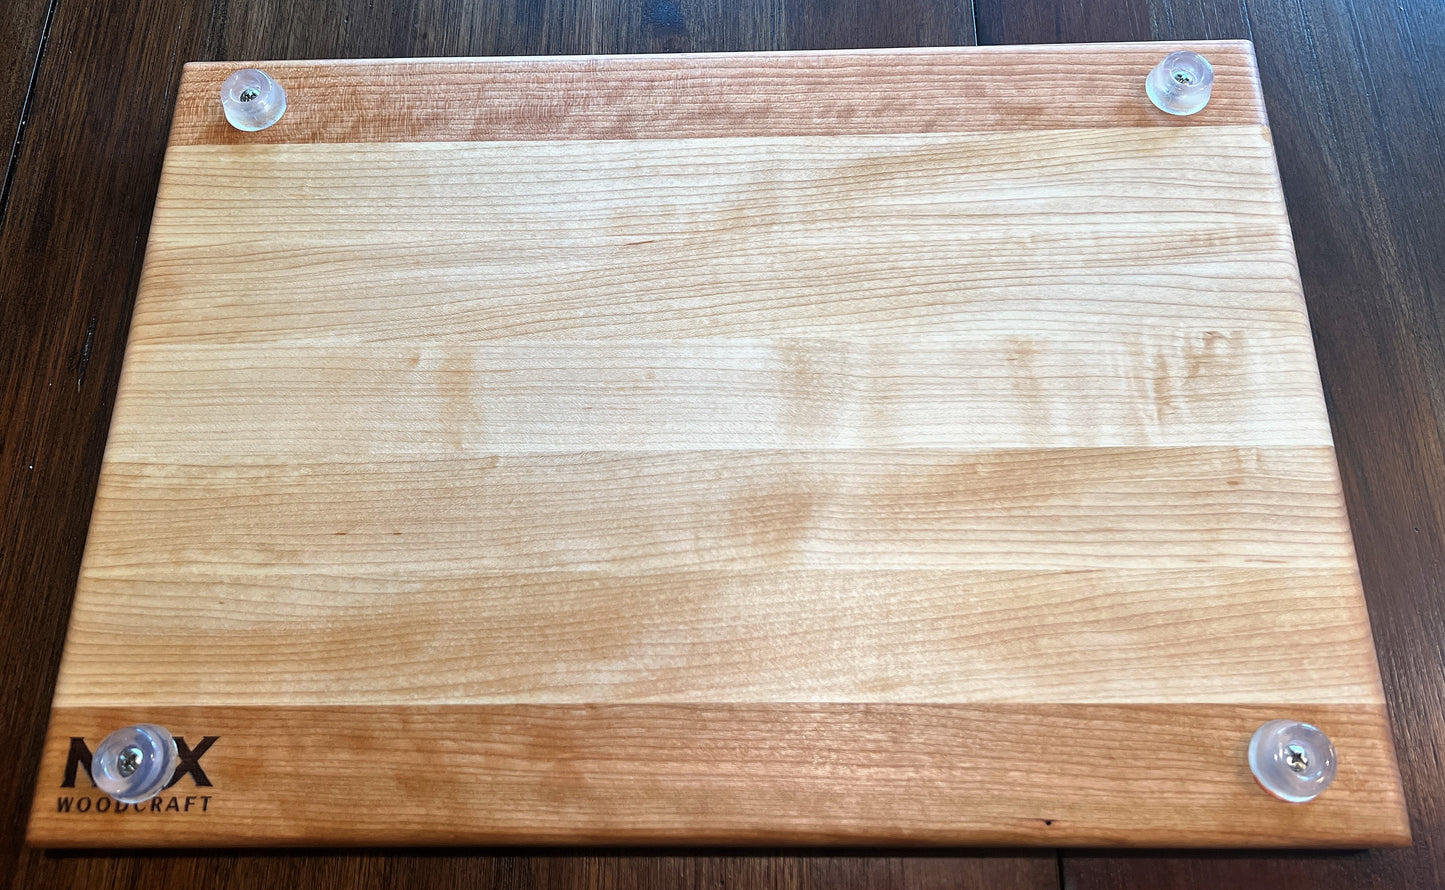 Edge Grain Cutting Board - Classic Cherry and Maple